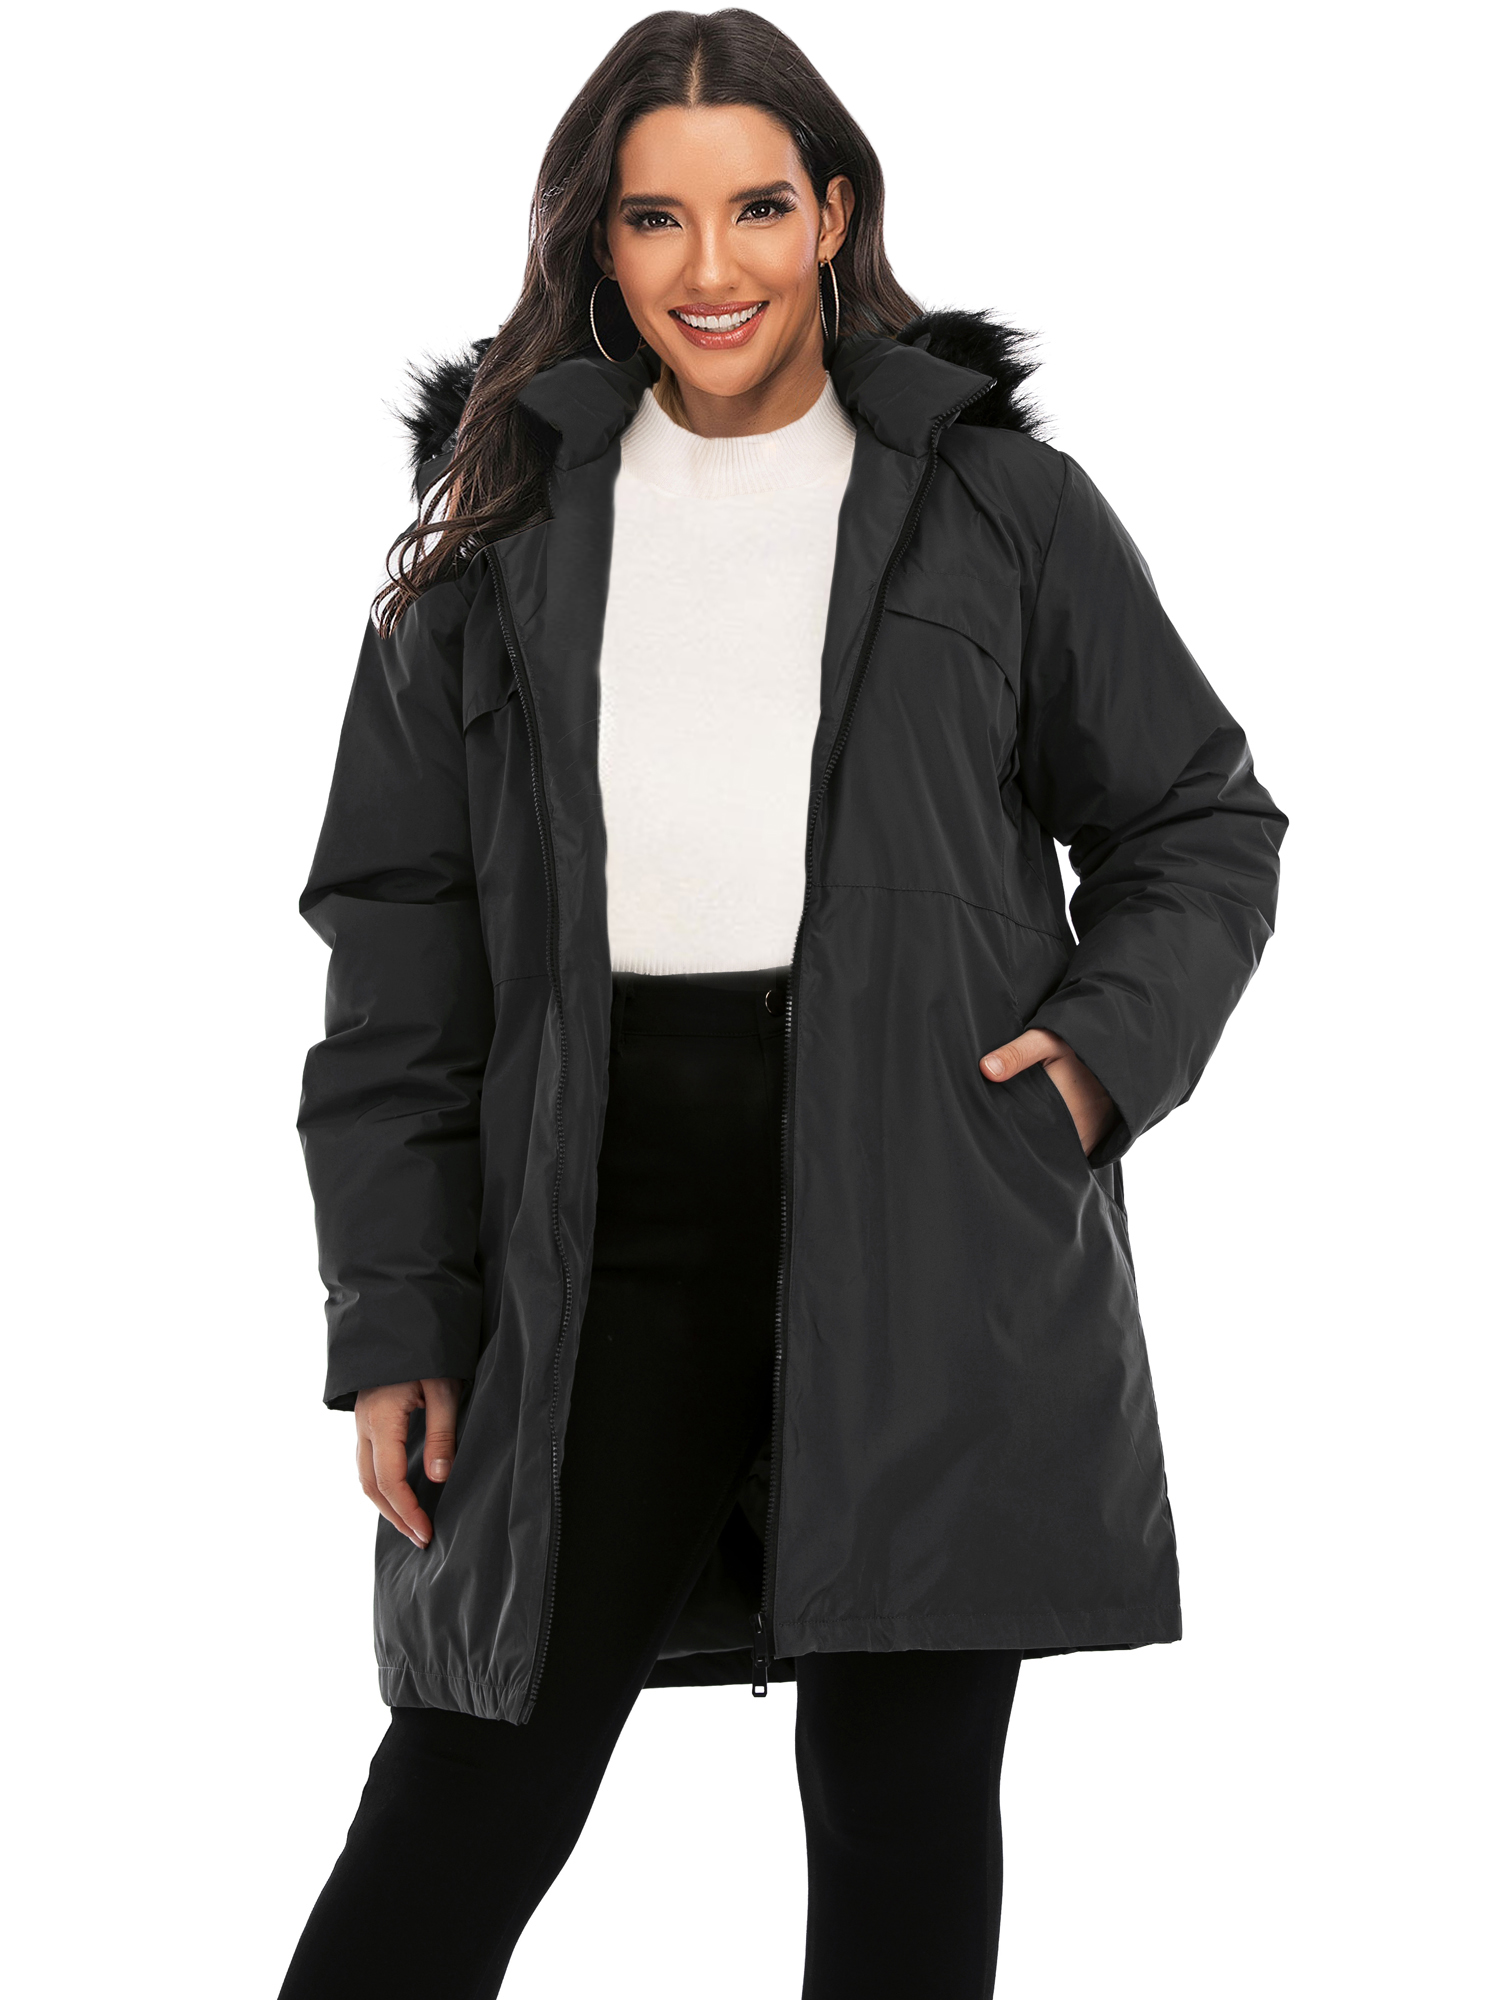 LELINTA Winter Plus Size Long Hoodie Coat Warm Jacket for Women, Zipper Parka Overcoats Raincoat Active Outdoor Trench Coat - image 3 of 7